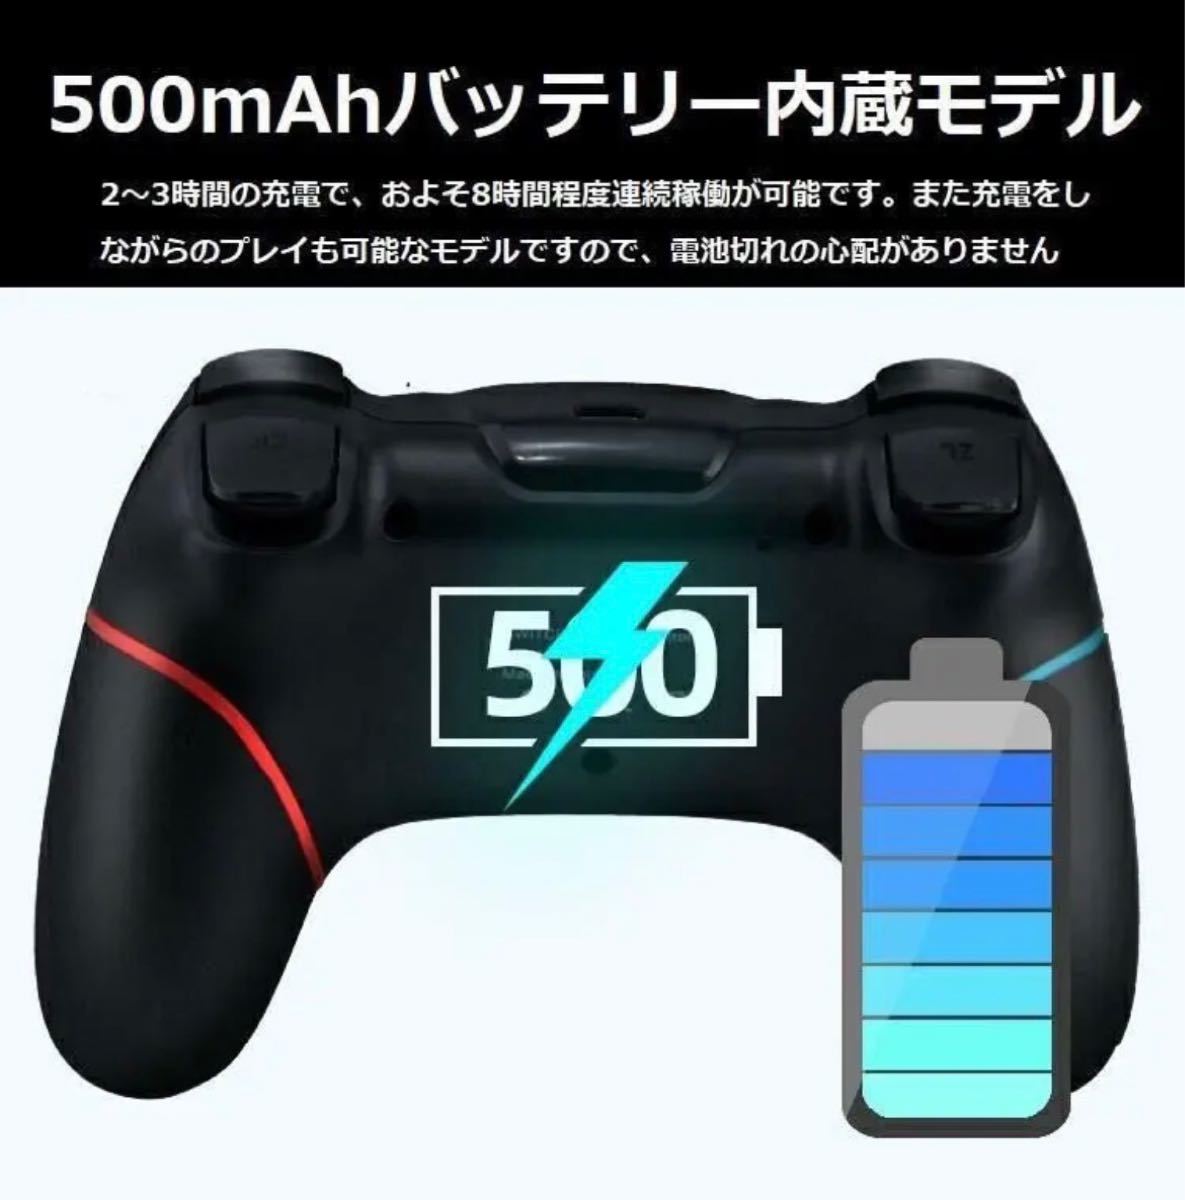 Switch スイッチ コントローラー 任天堂 プロコン ジョイコン ワイヤレス ピンク